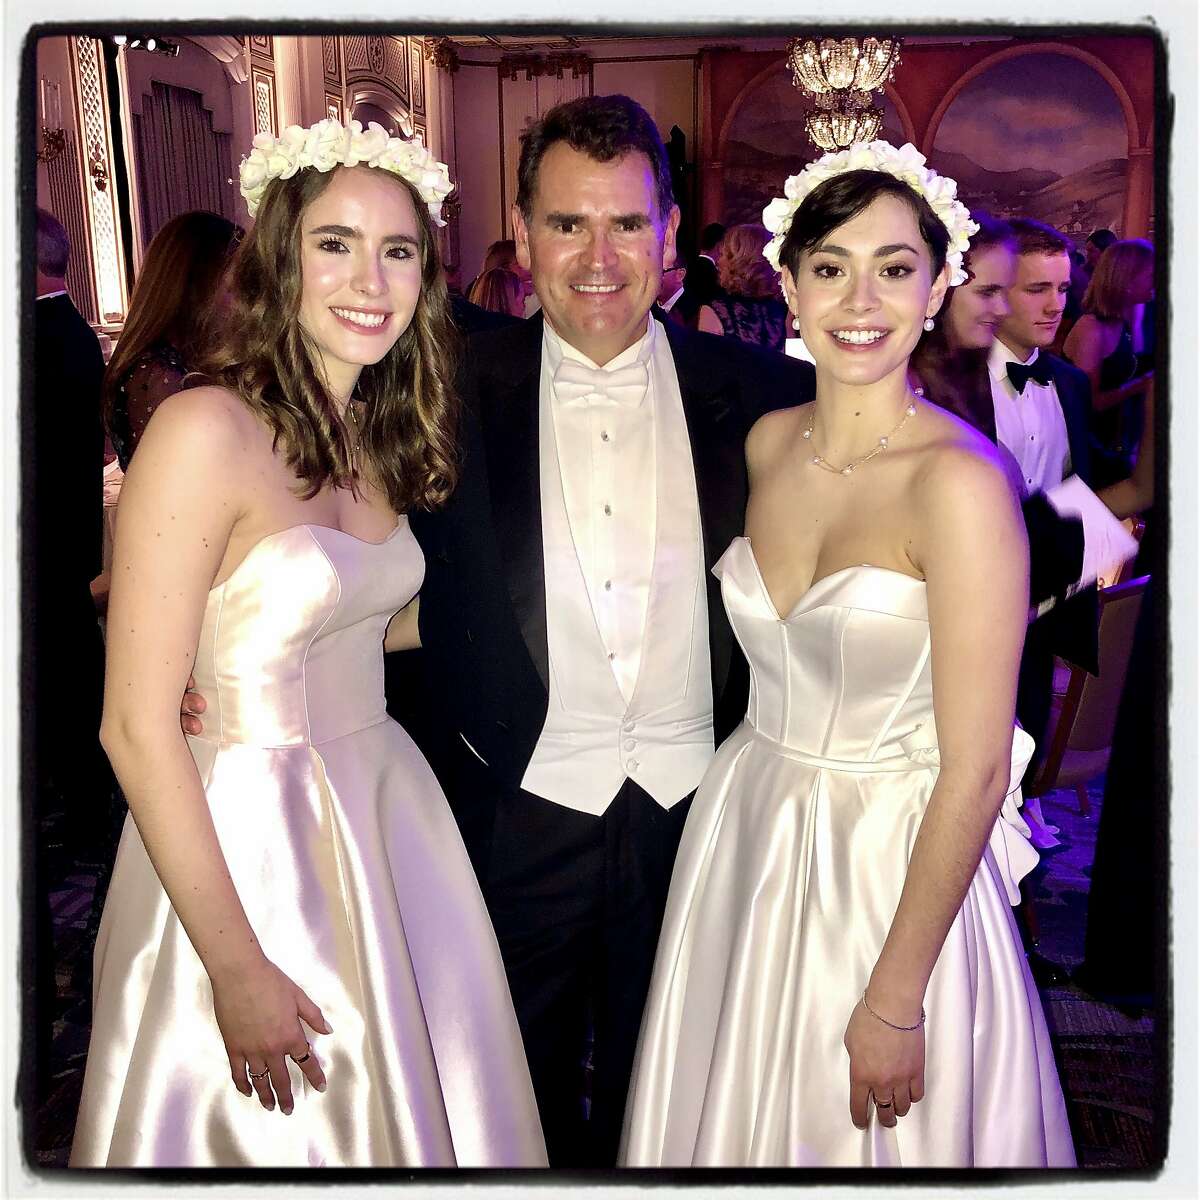 Christian Huebner with his twin debutante daughters, Frances (left) and Katharine Huebner at the Cotillion Debutante Ball. Dec. 21, 2019.